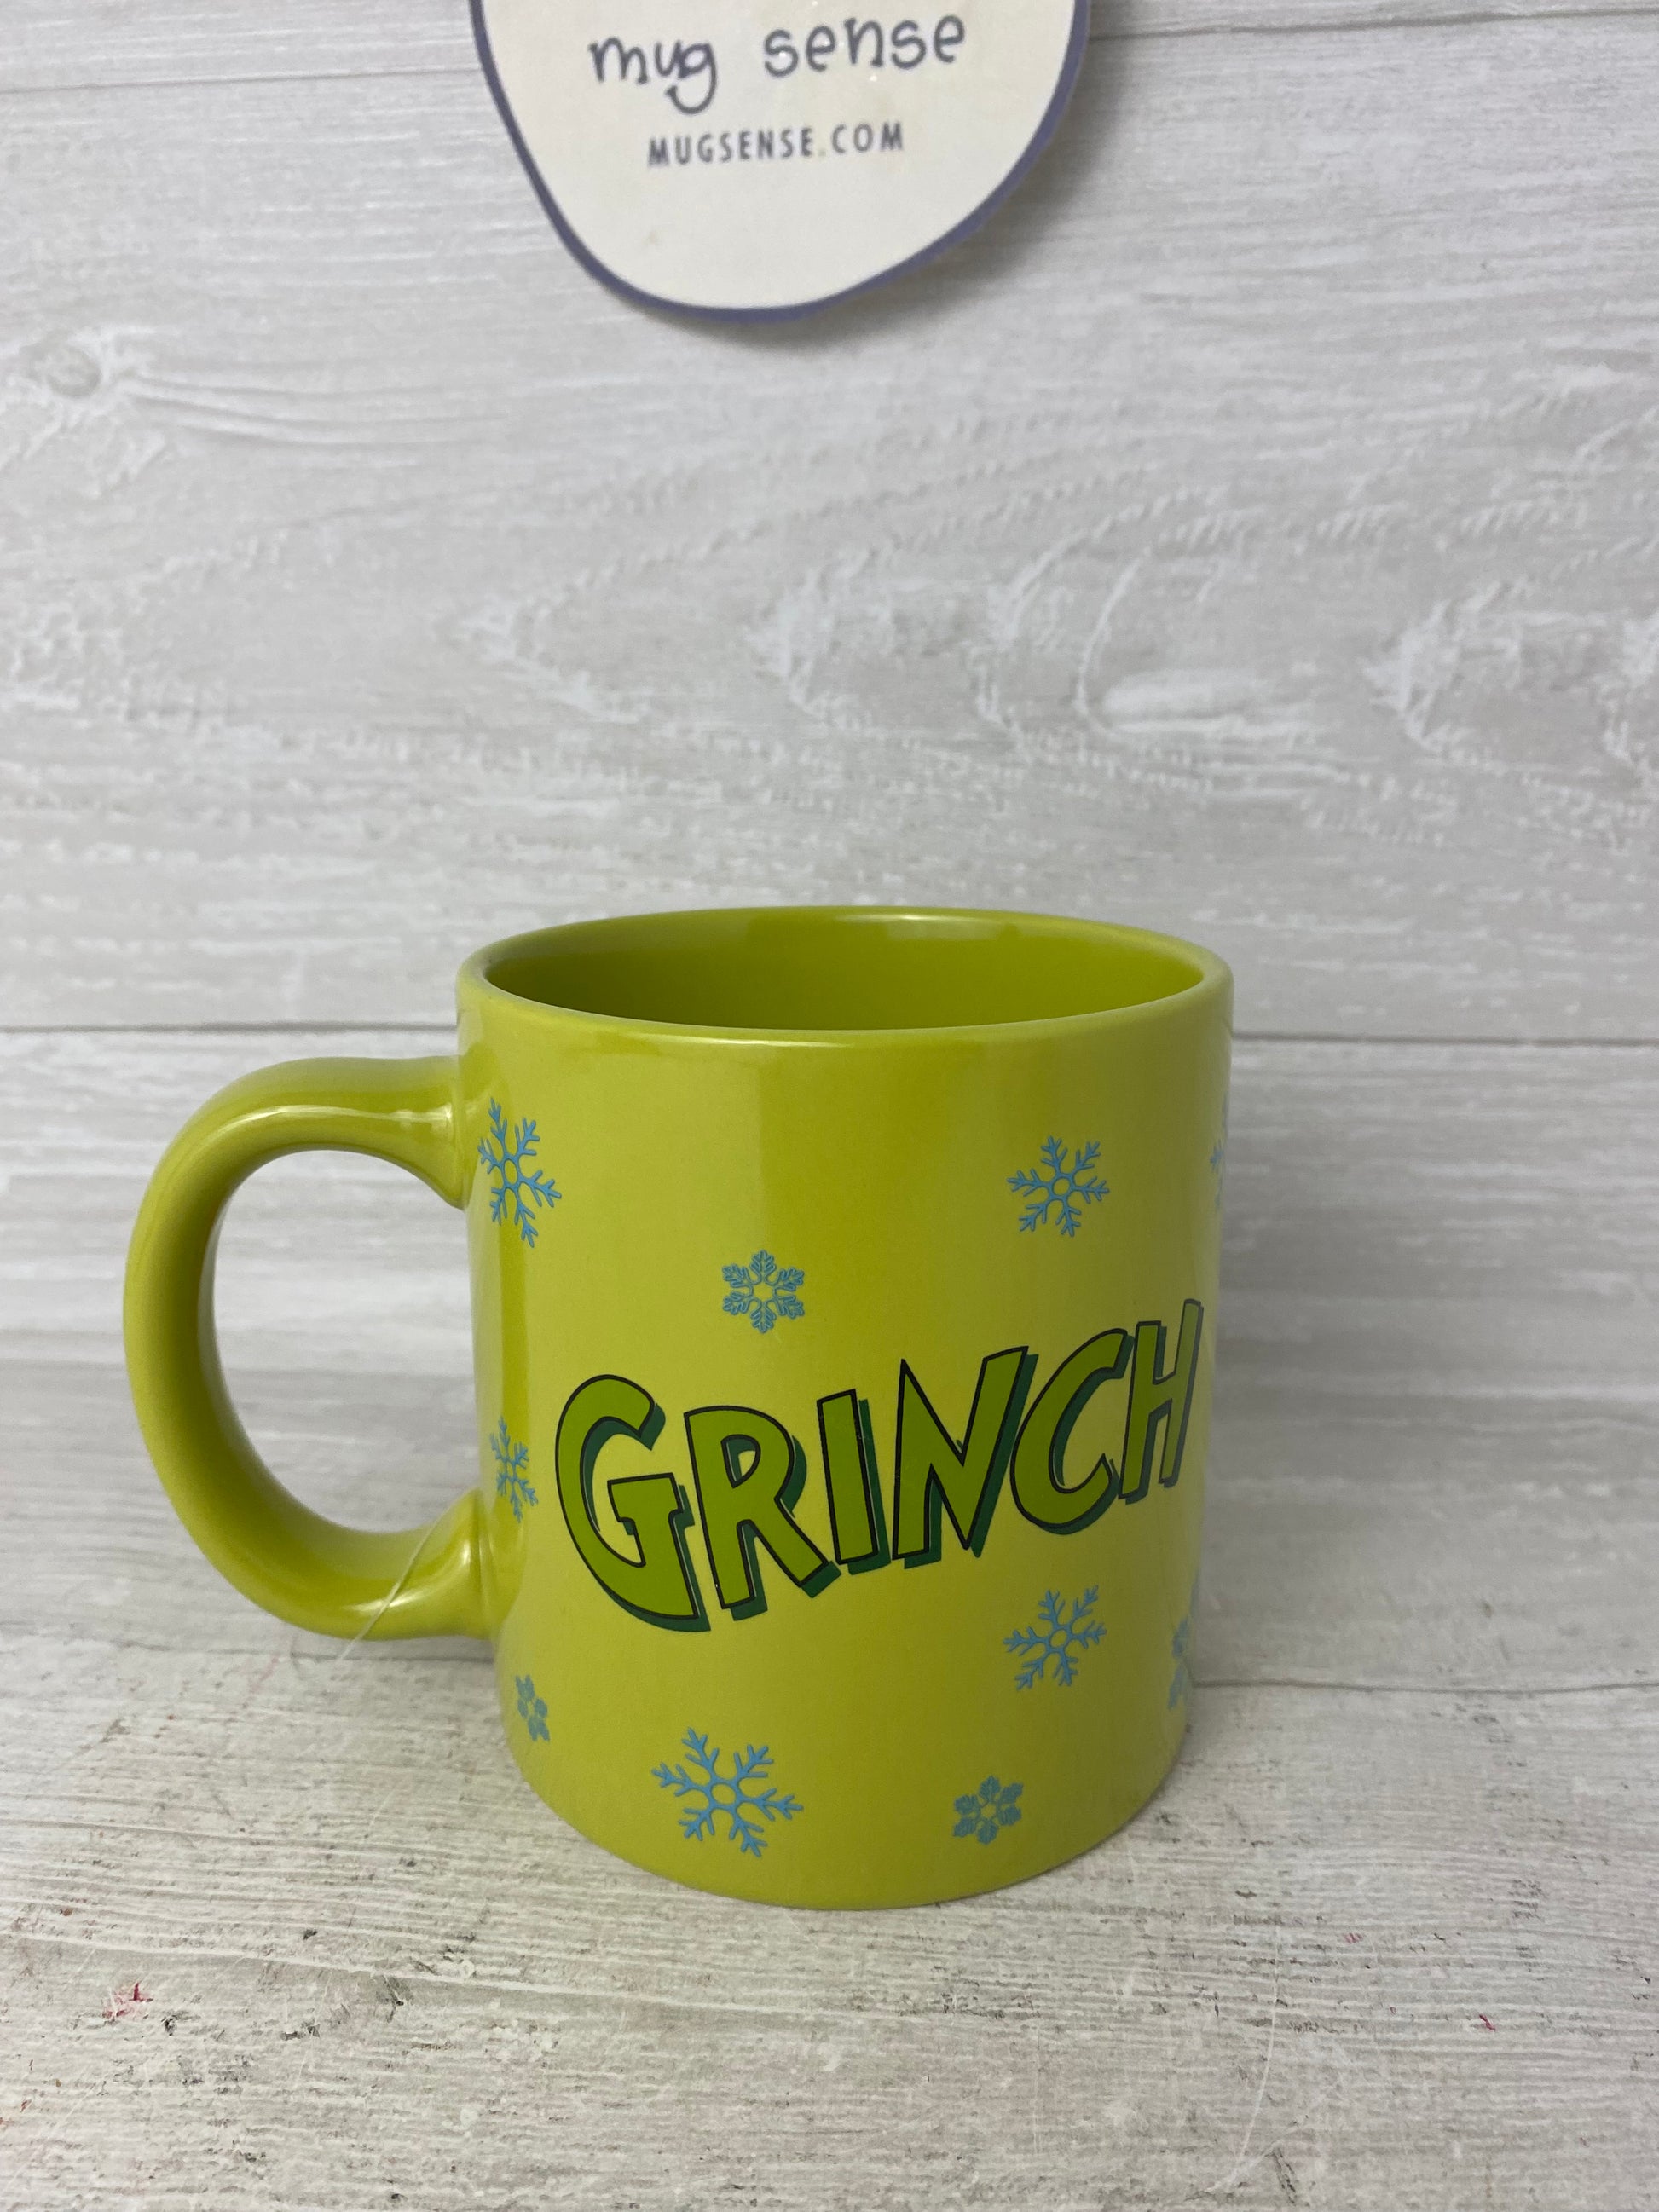 I'm Not Going Grinch Mug